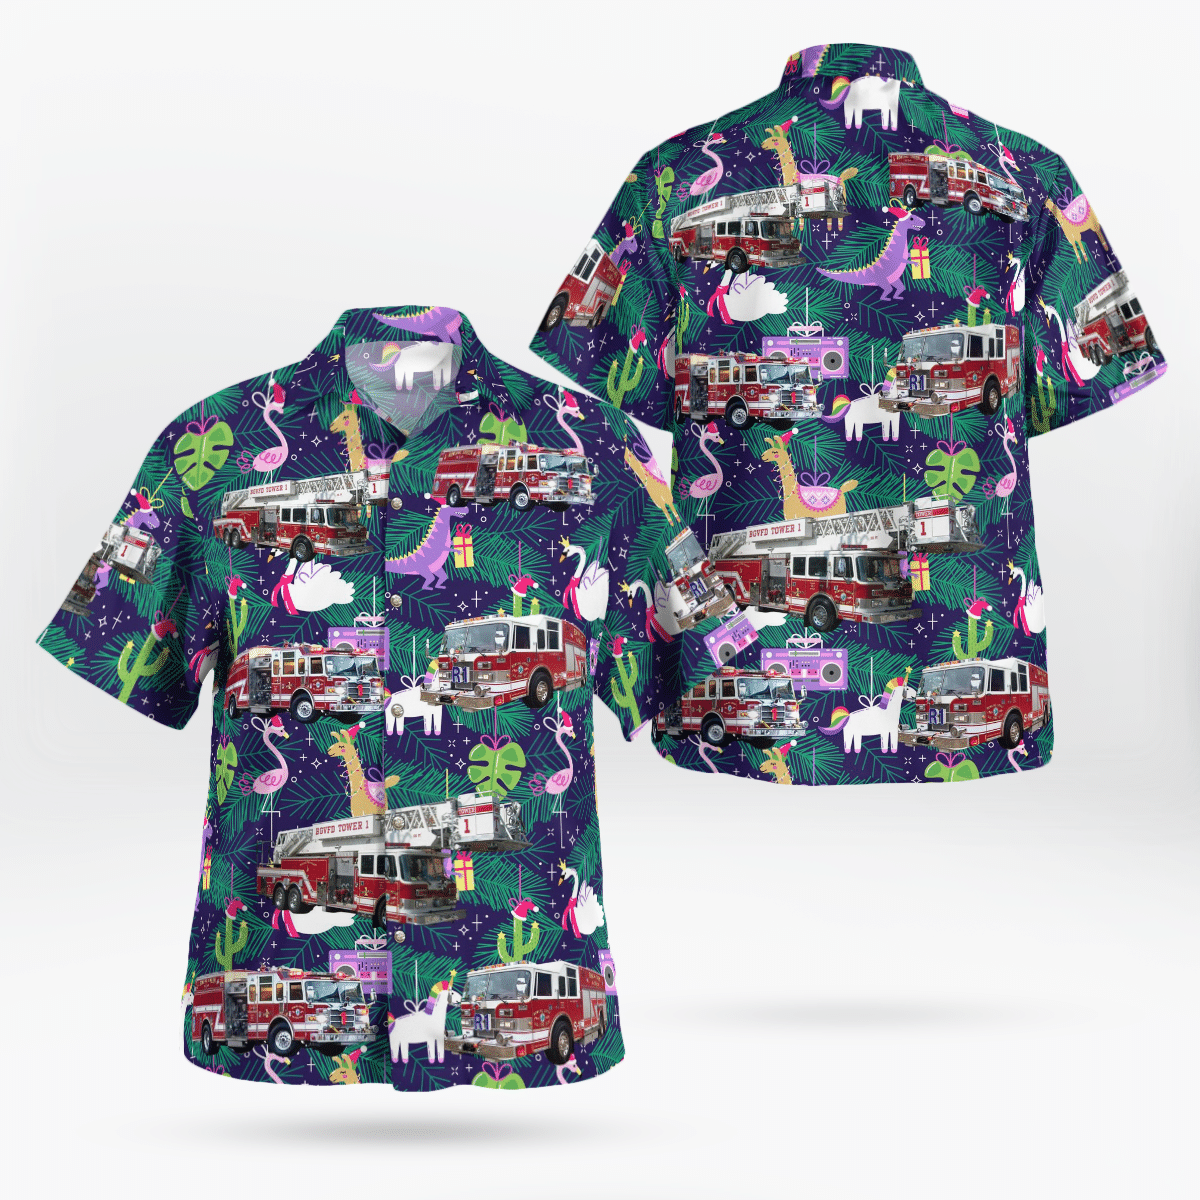 Listed below are some High-quality Aloha Shirt 425